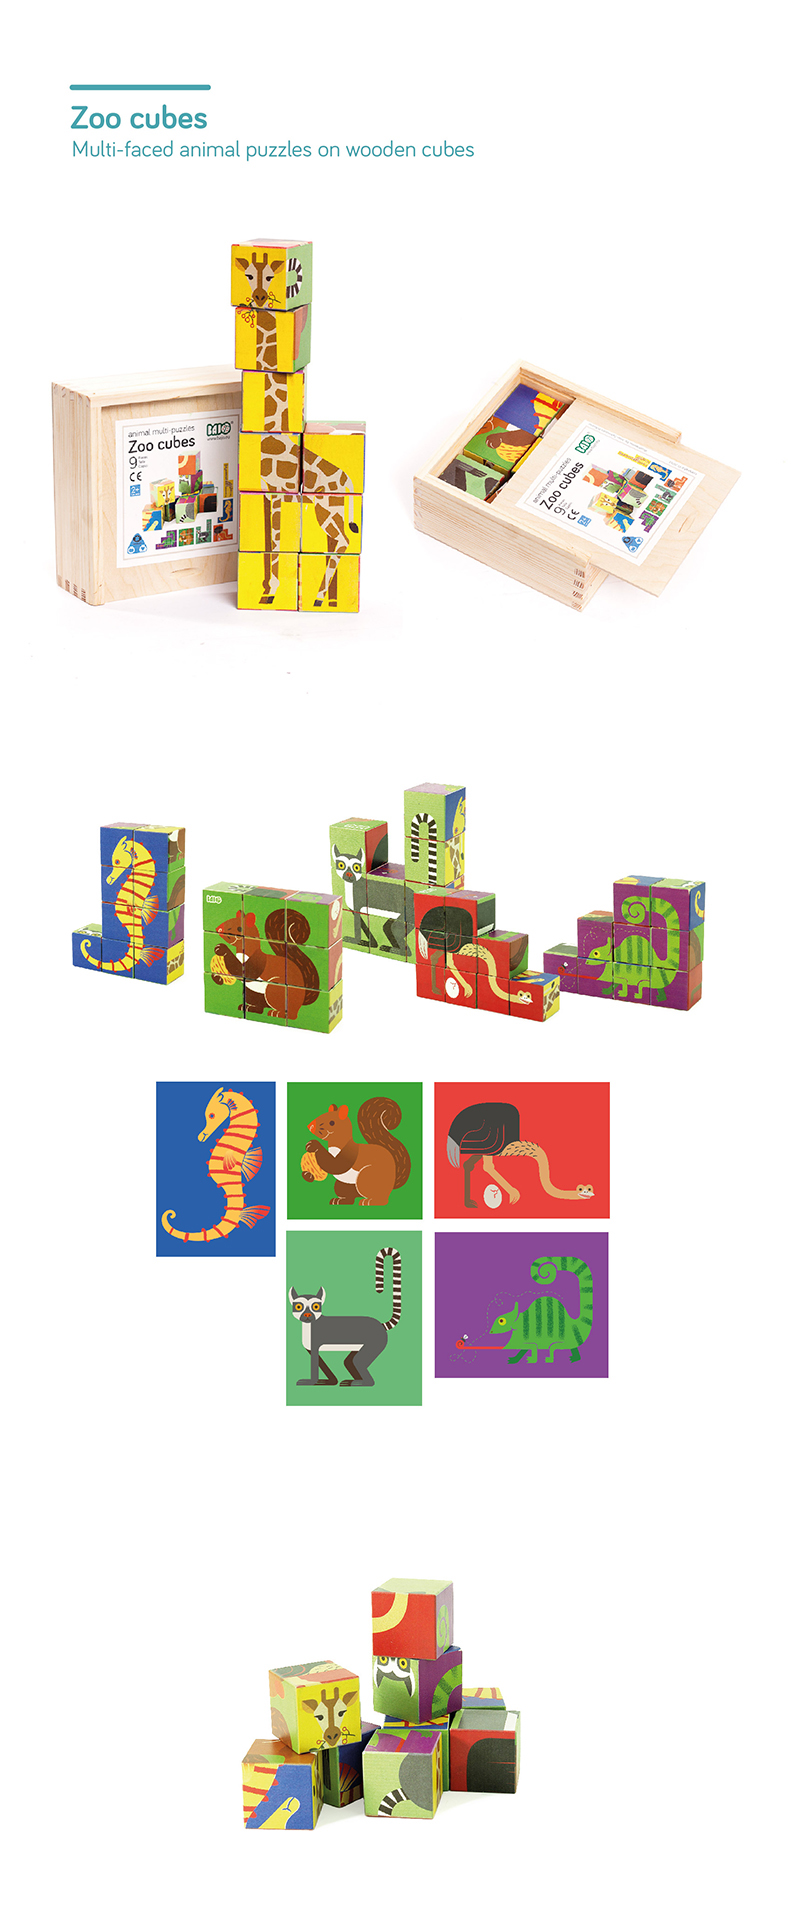 animals buildings puzzle Jigsaw toys wooden toy Label wood children Red riding hood kopciuszek dragon Princess